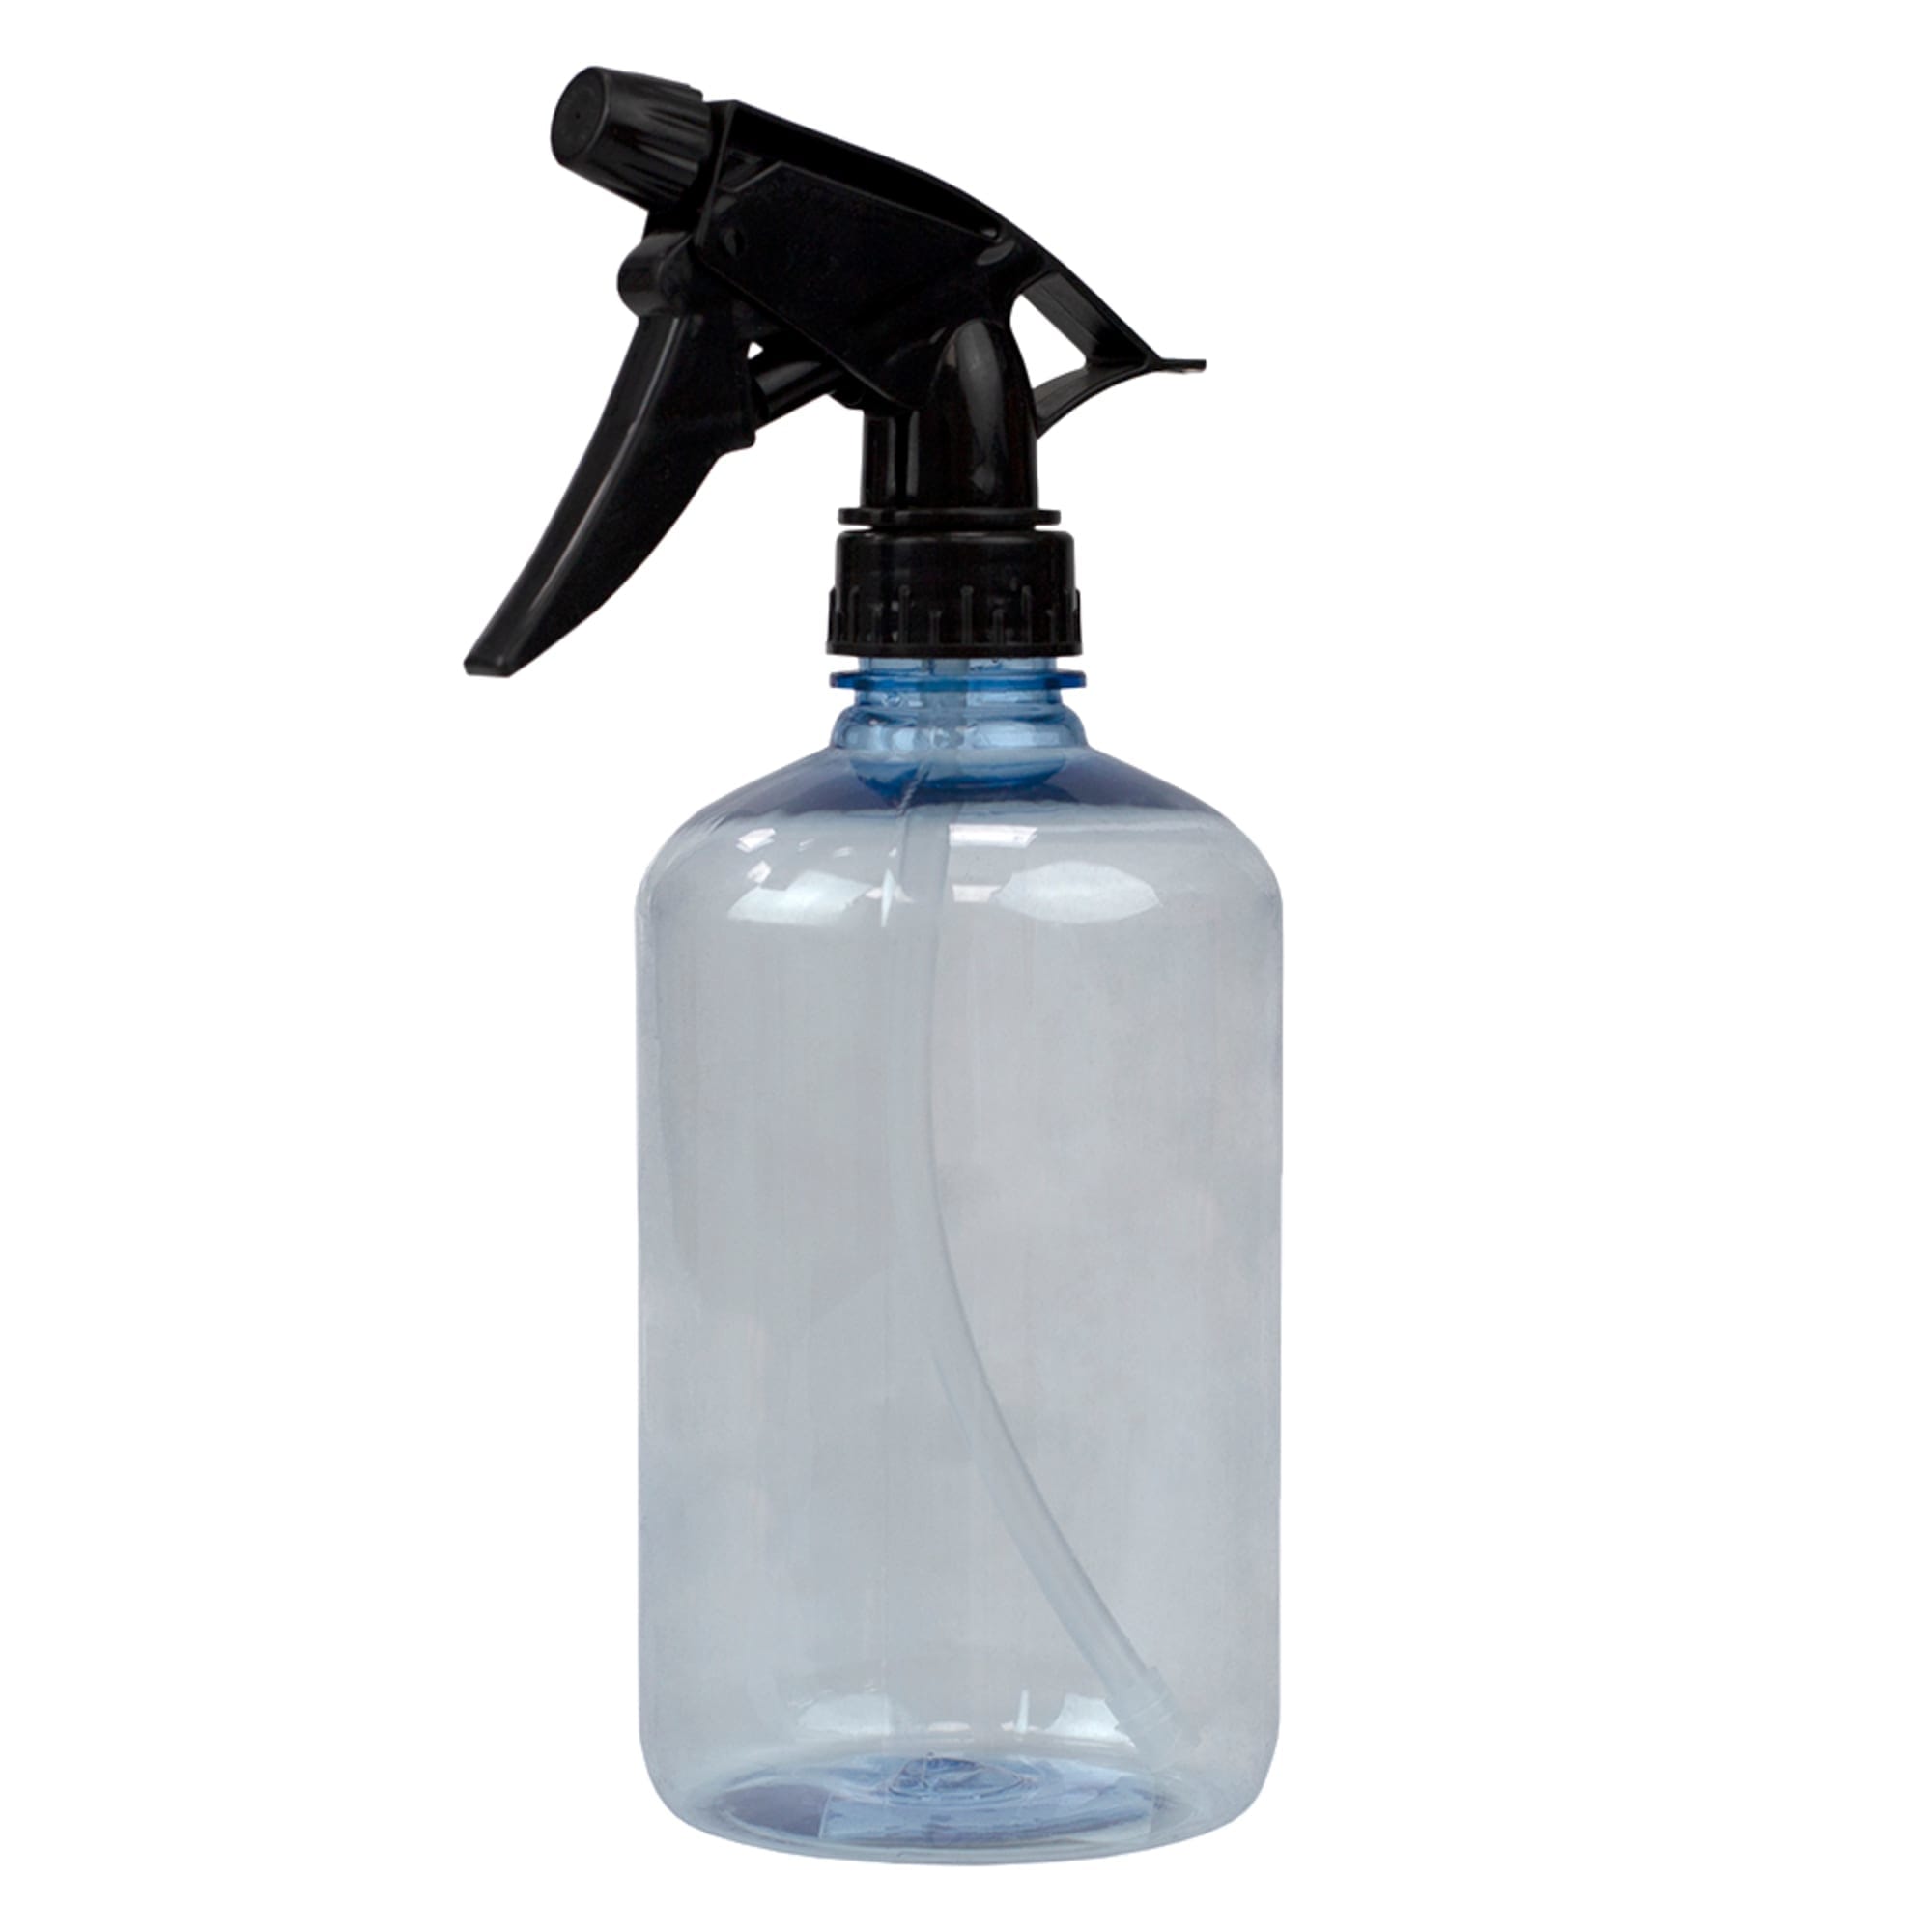 Home Basics 17 oz Plastic Empty Spray Bottle, Clear $1.50 EACH, CASE PACK OF 24